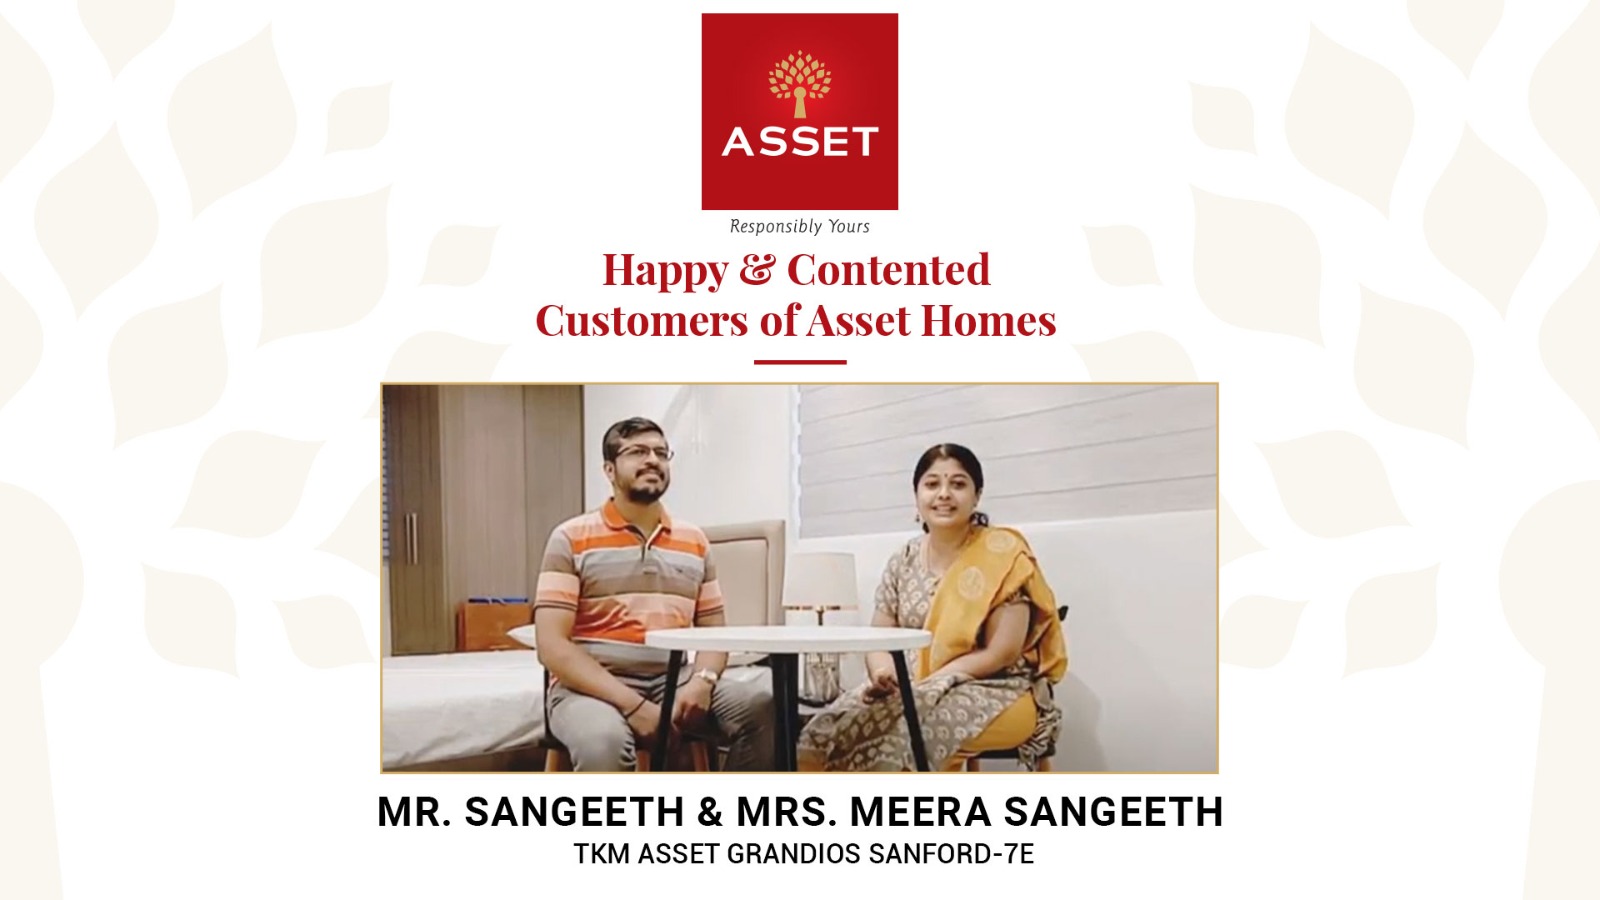 Mr. Sangeeth & Mrs. Meera Sangeeth, TKM Asset Grandios Sanford-7E